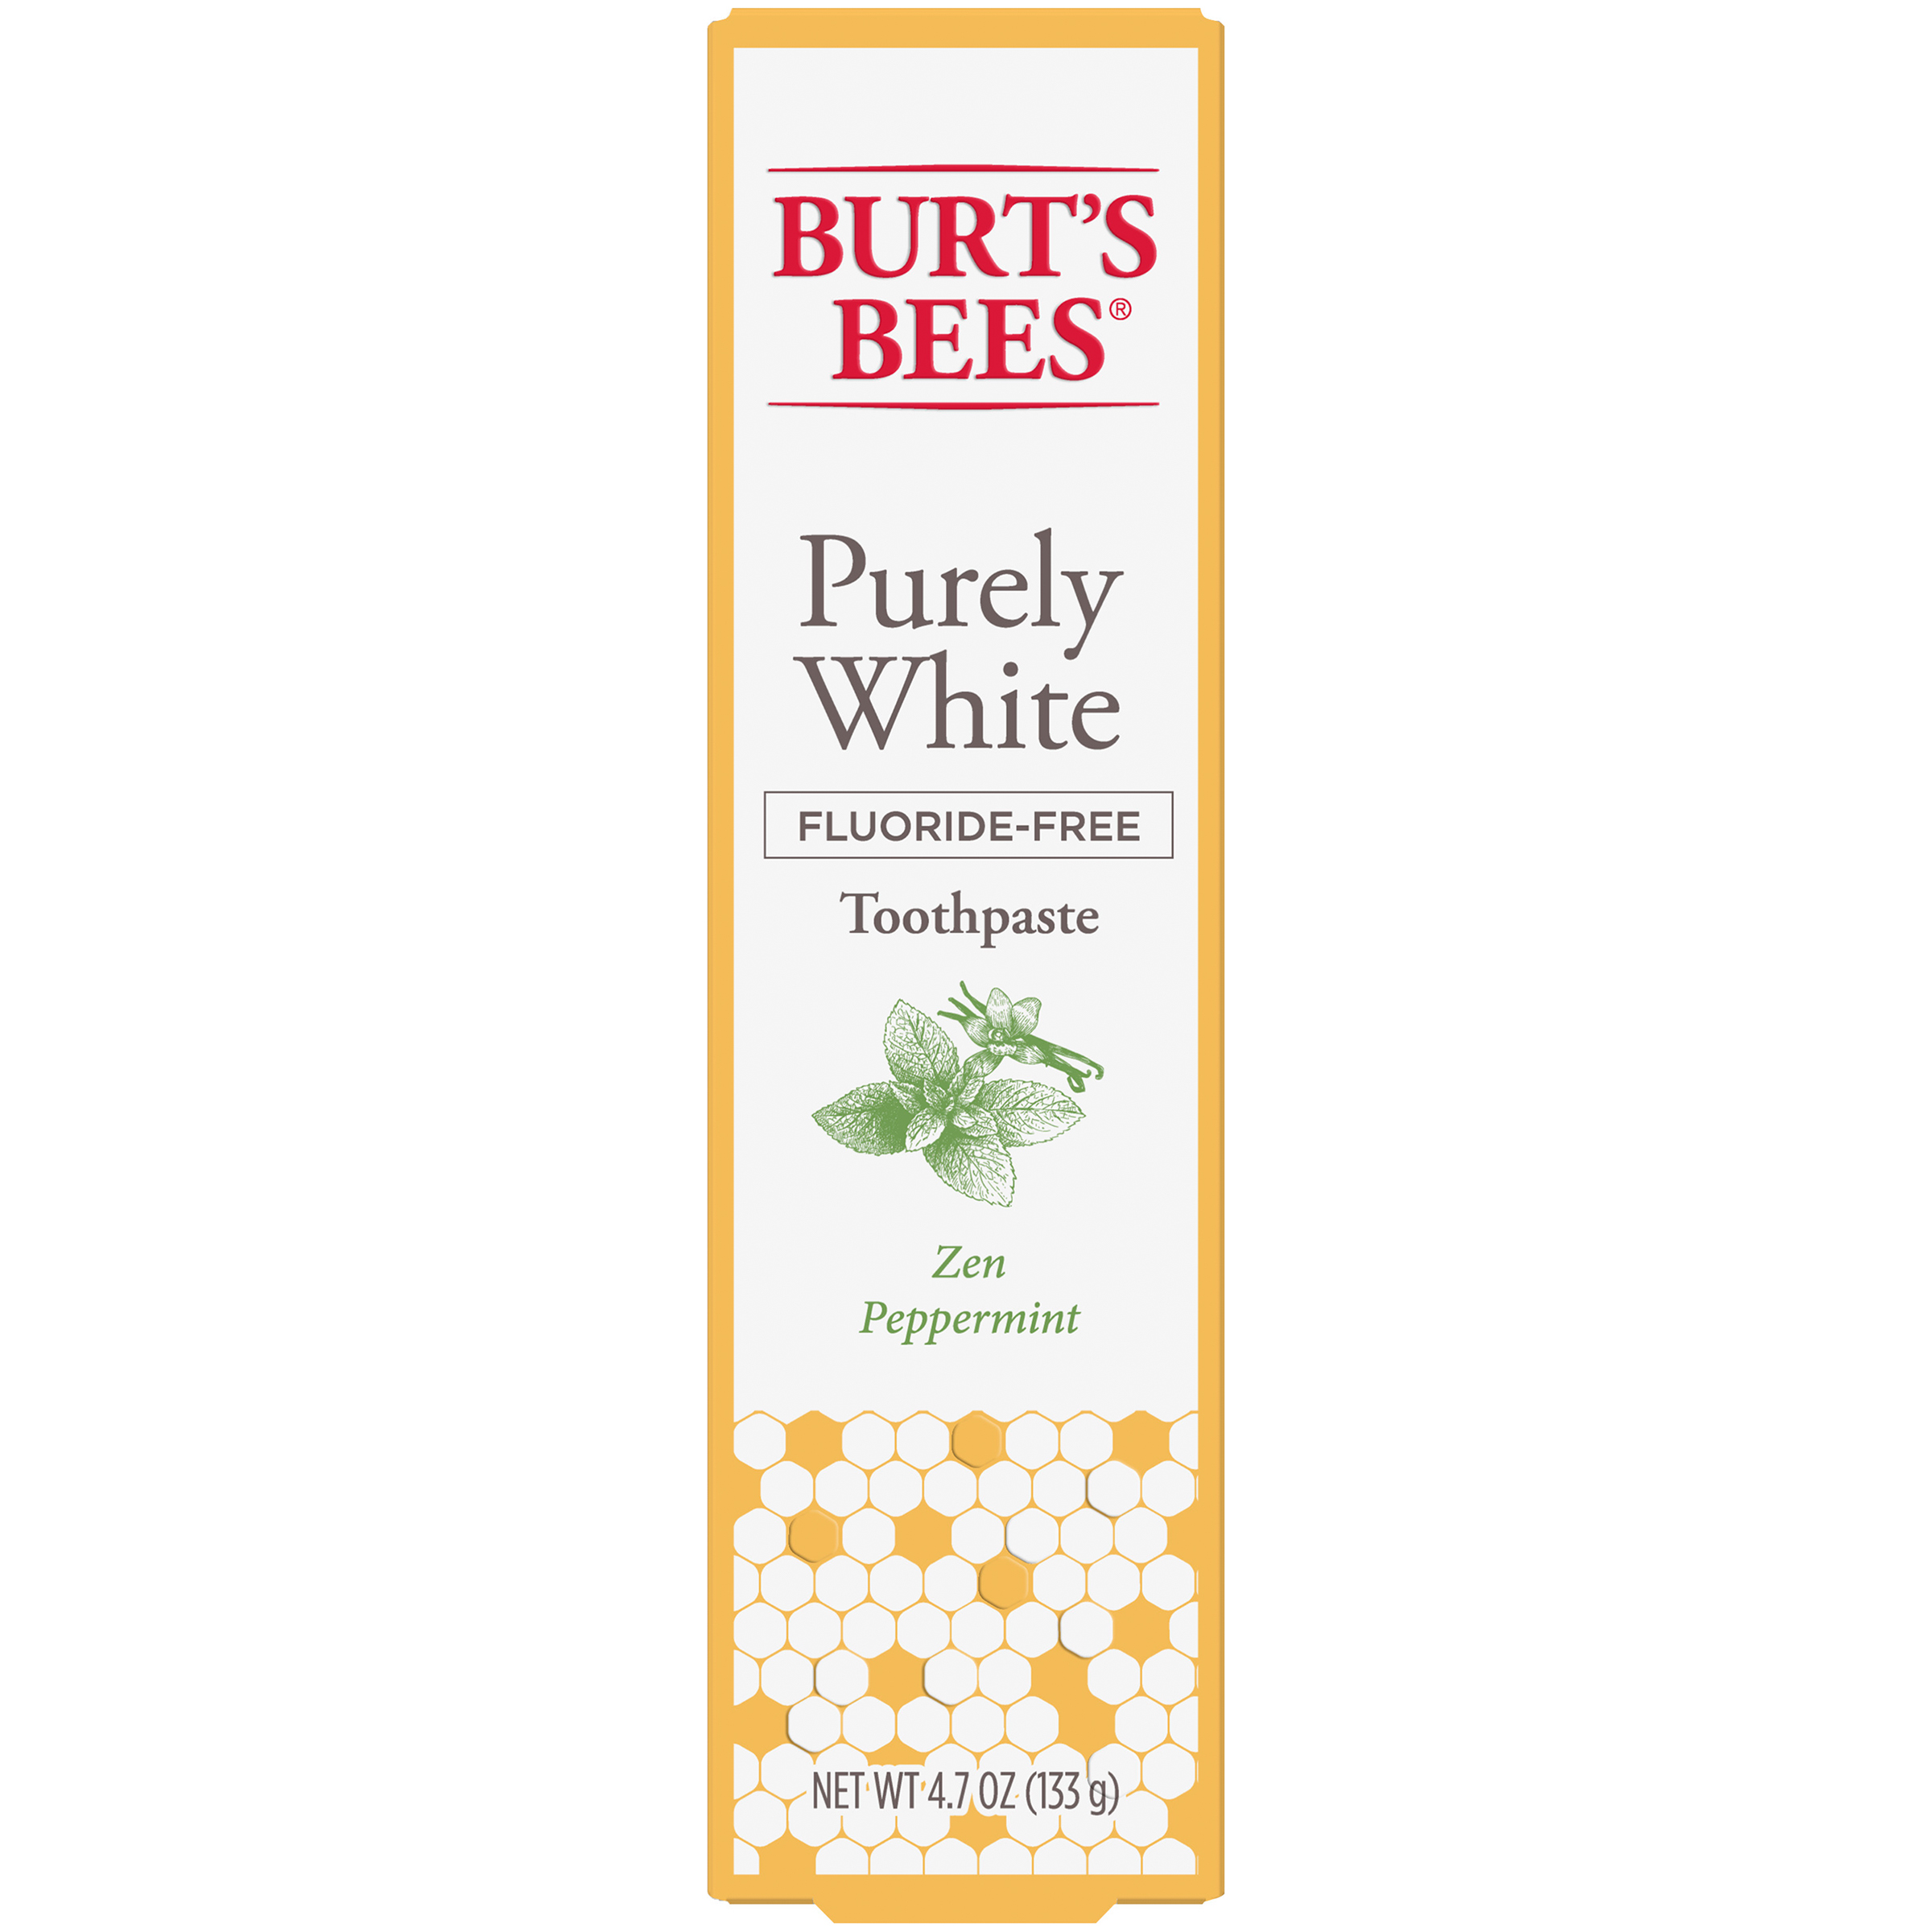 Burt's Bees Toothpaste, Fluoride Free, Purely White, Zen Peppermint, 4.2 oz - image 1 of 11